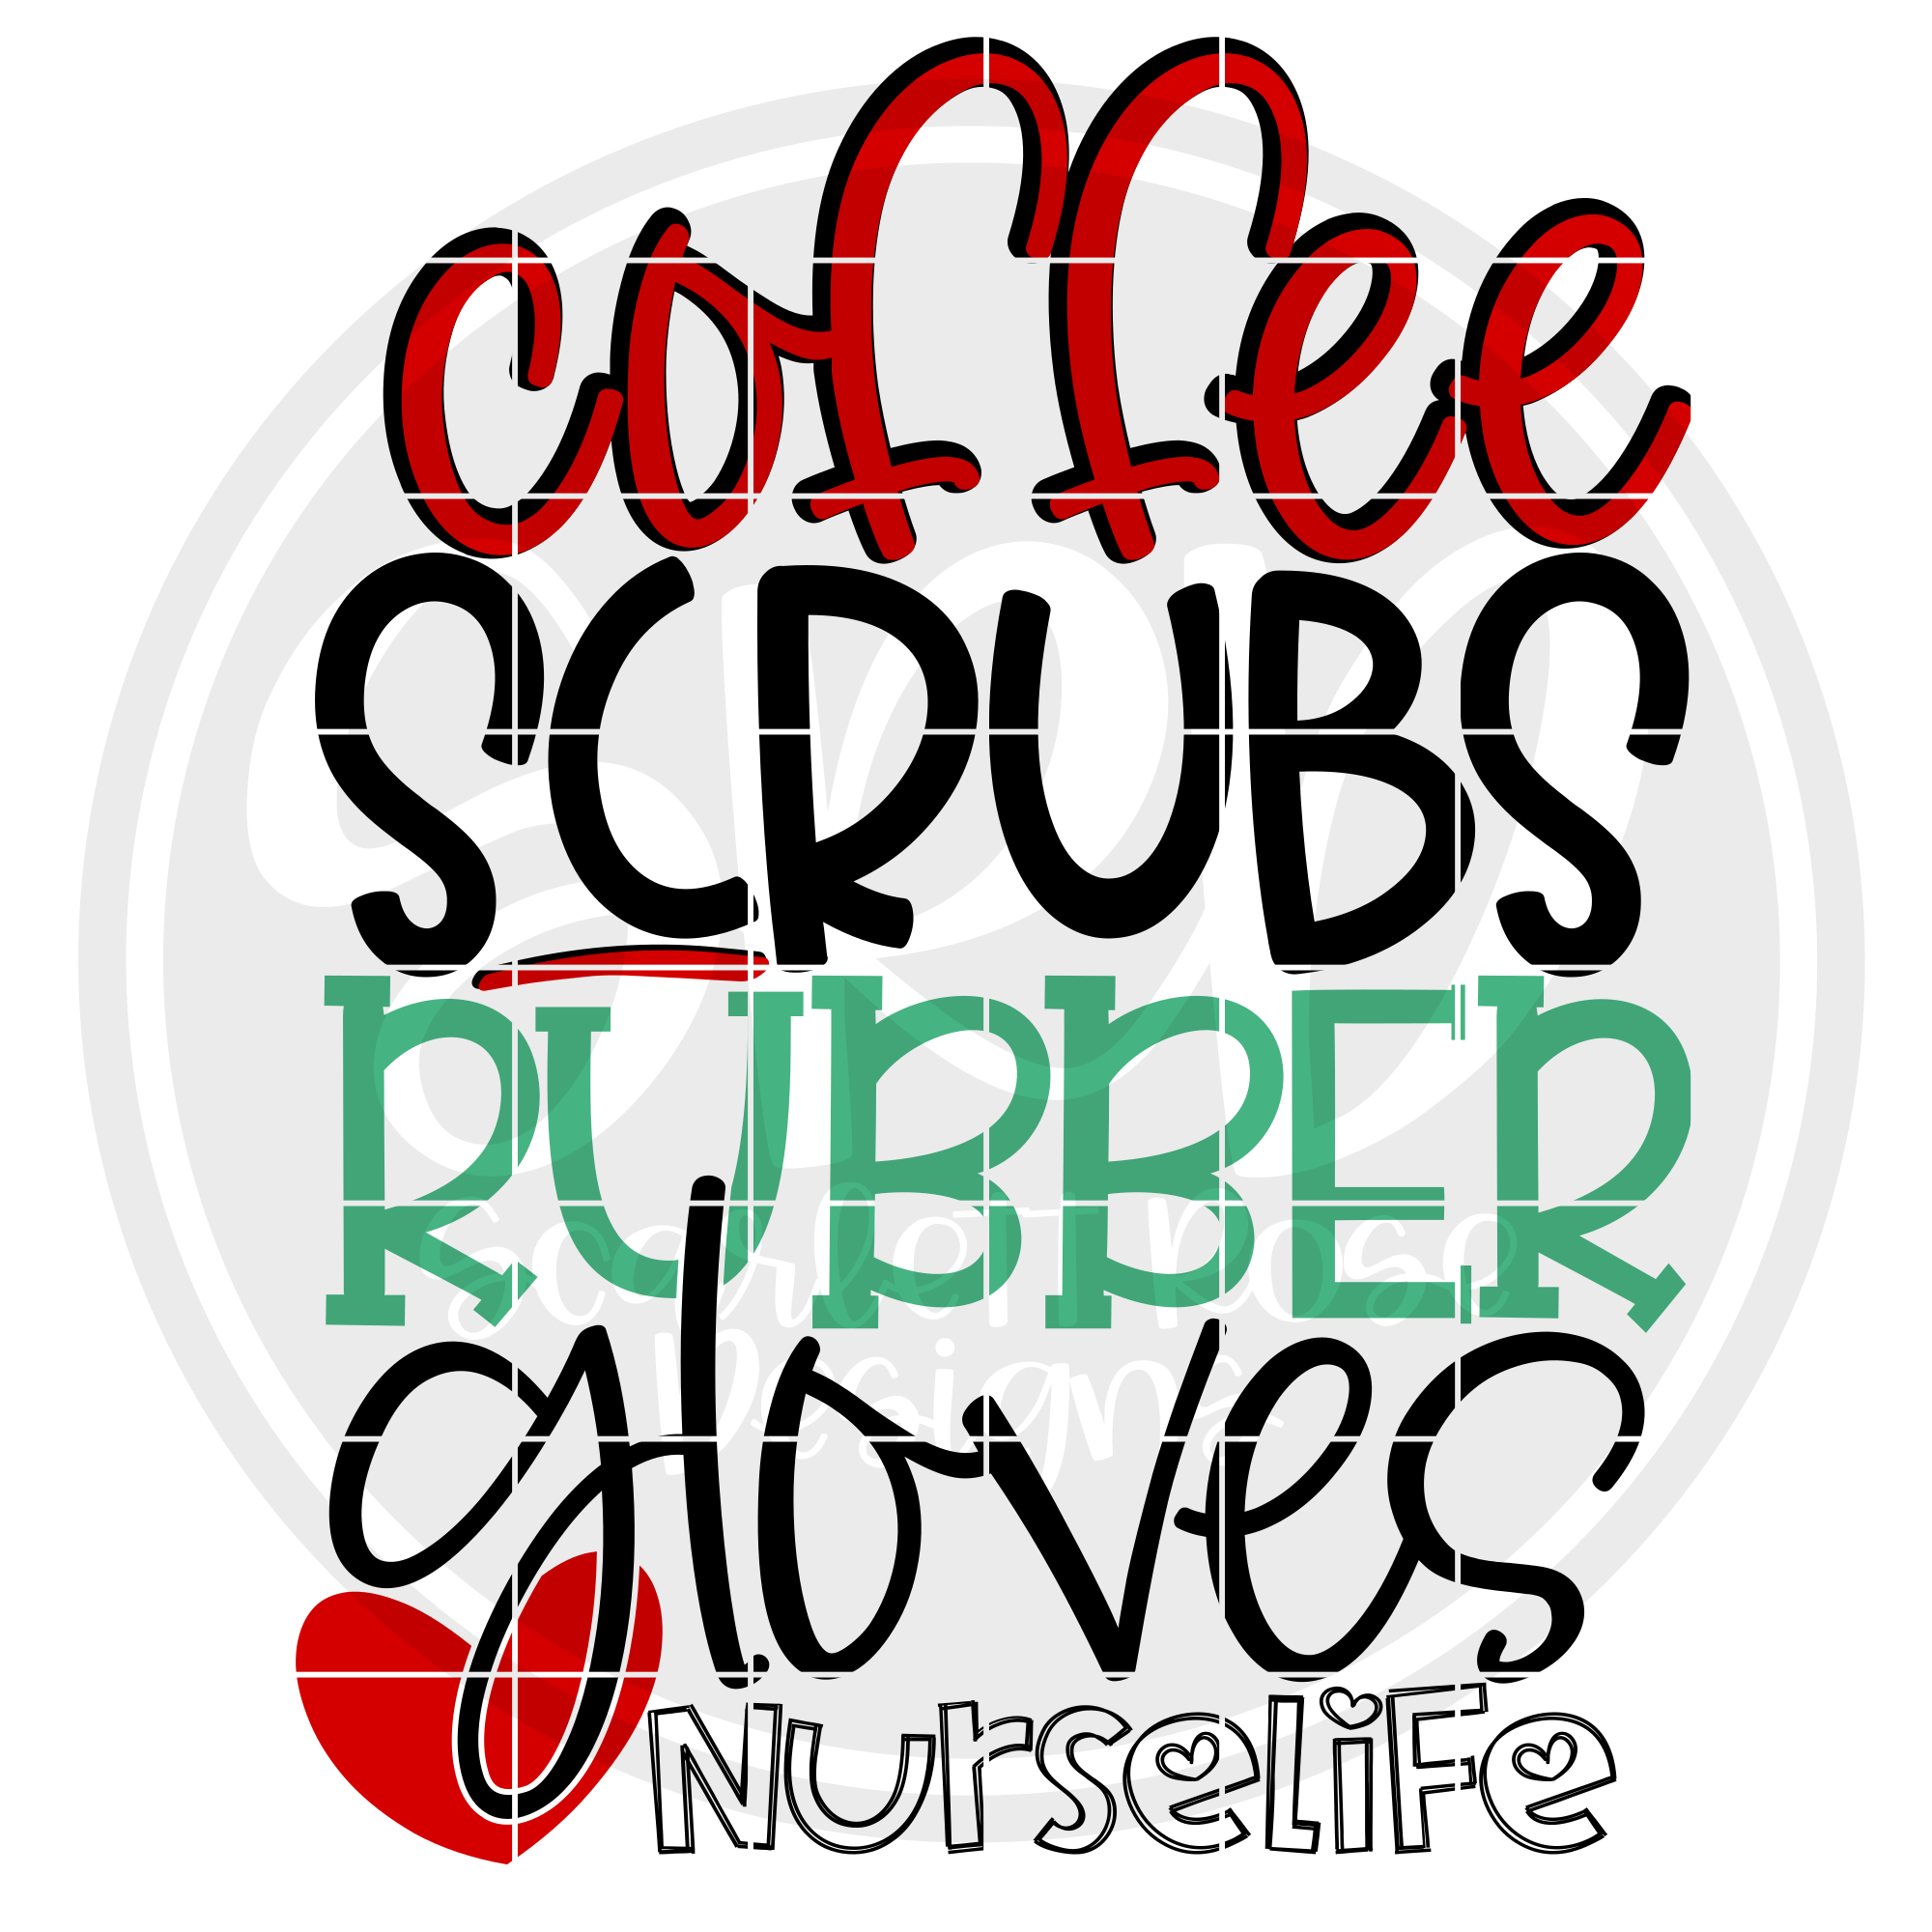 Download Nurse Svg Coffee Scrubs Rubber Gloves Nurse Life Svg Cut File Scarlett Rose Designs